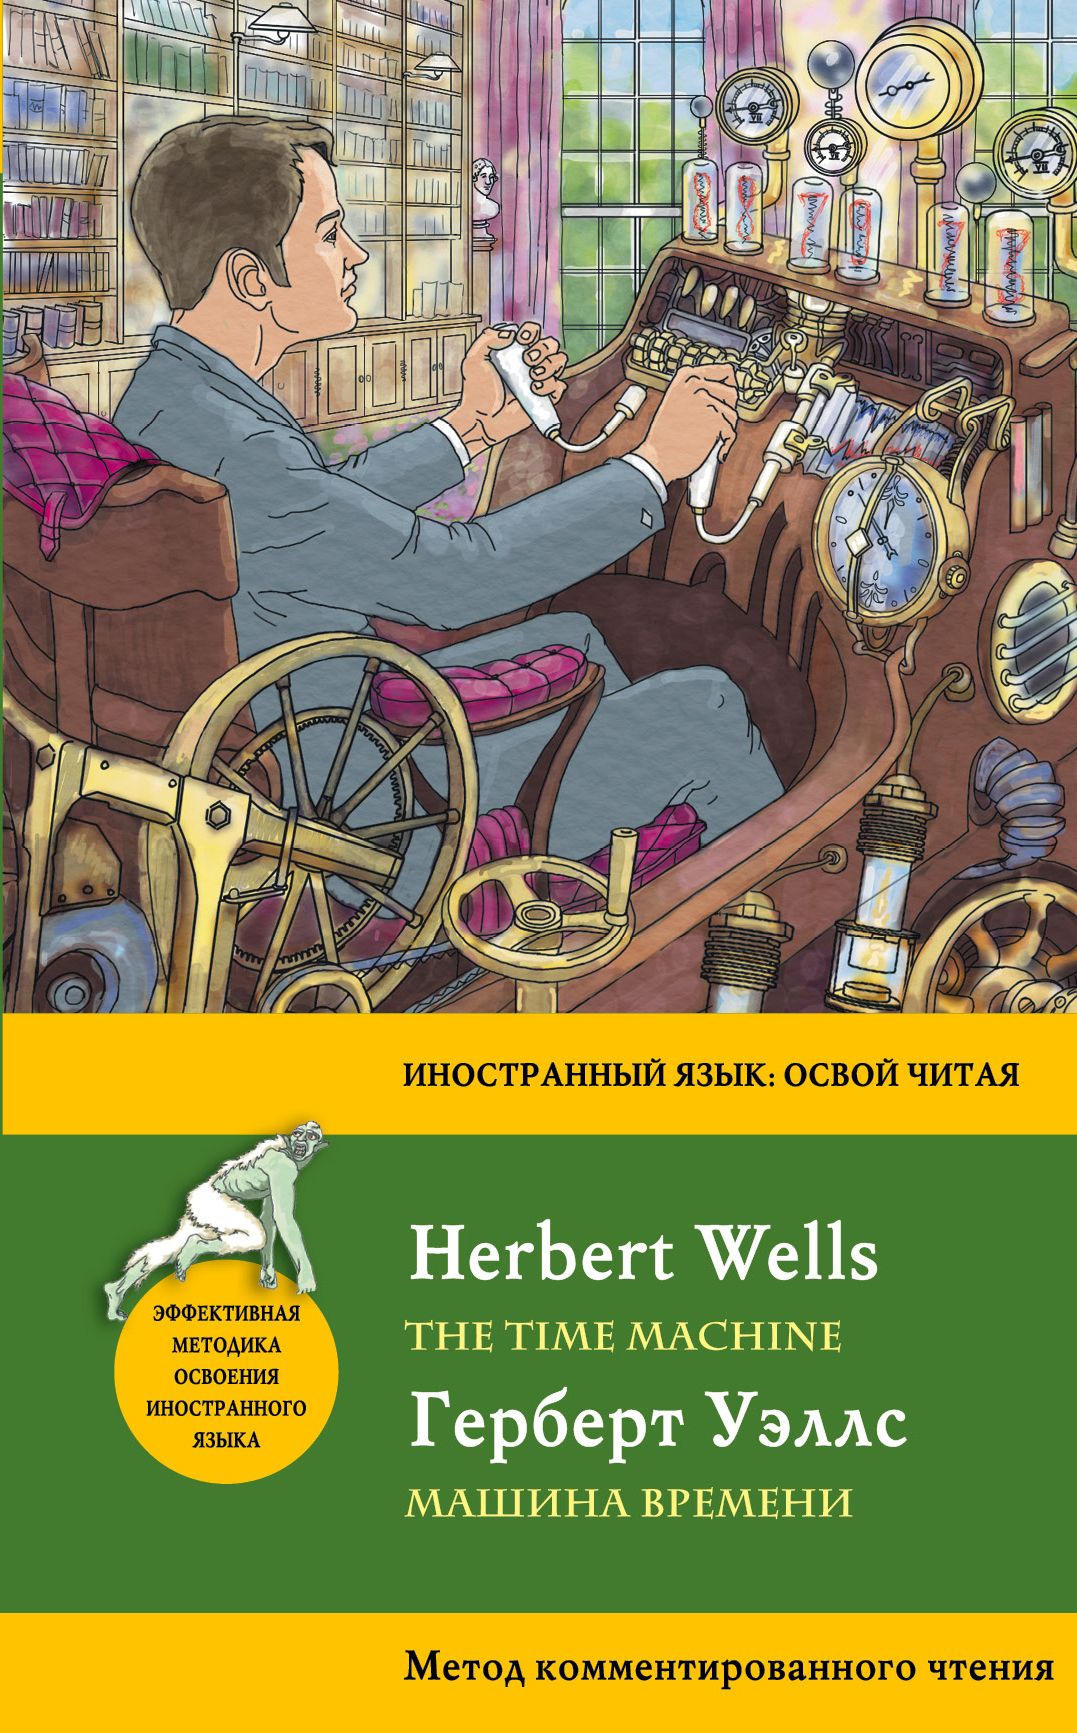 Магазин времени книга. Герберт Уэллс машина времени. Герберт Уэллс машина времени иллюстрации. Машина времени книга.